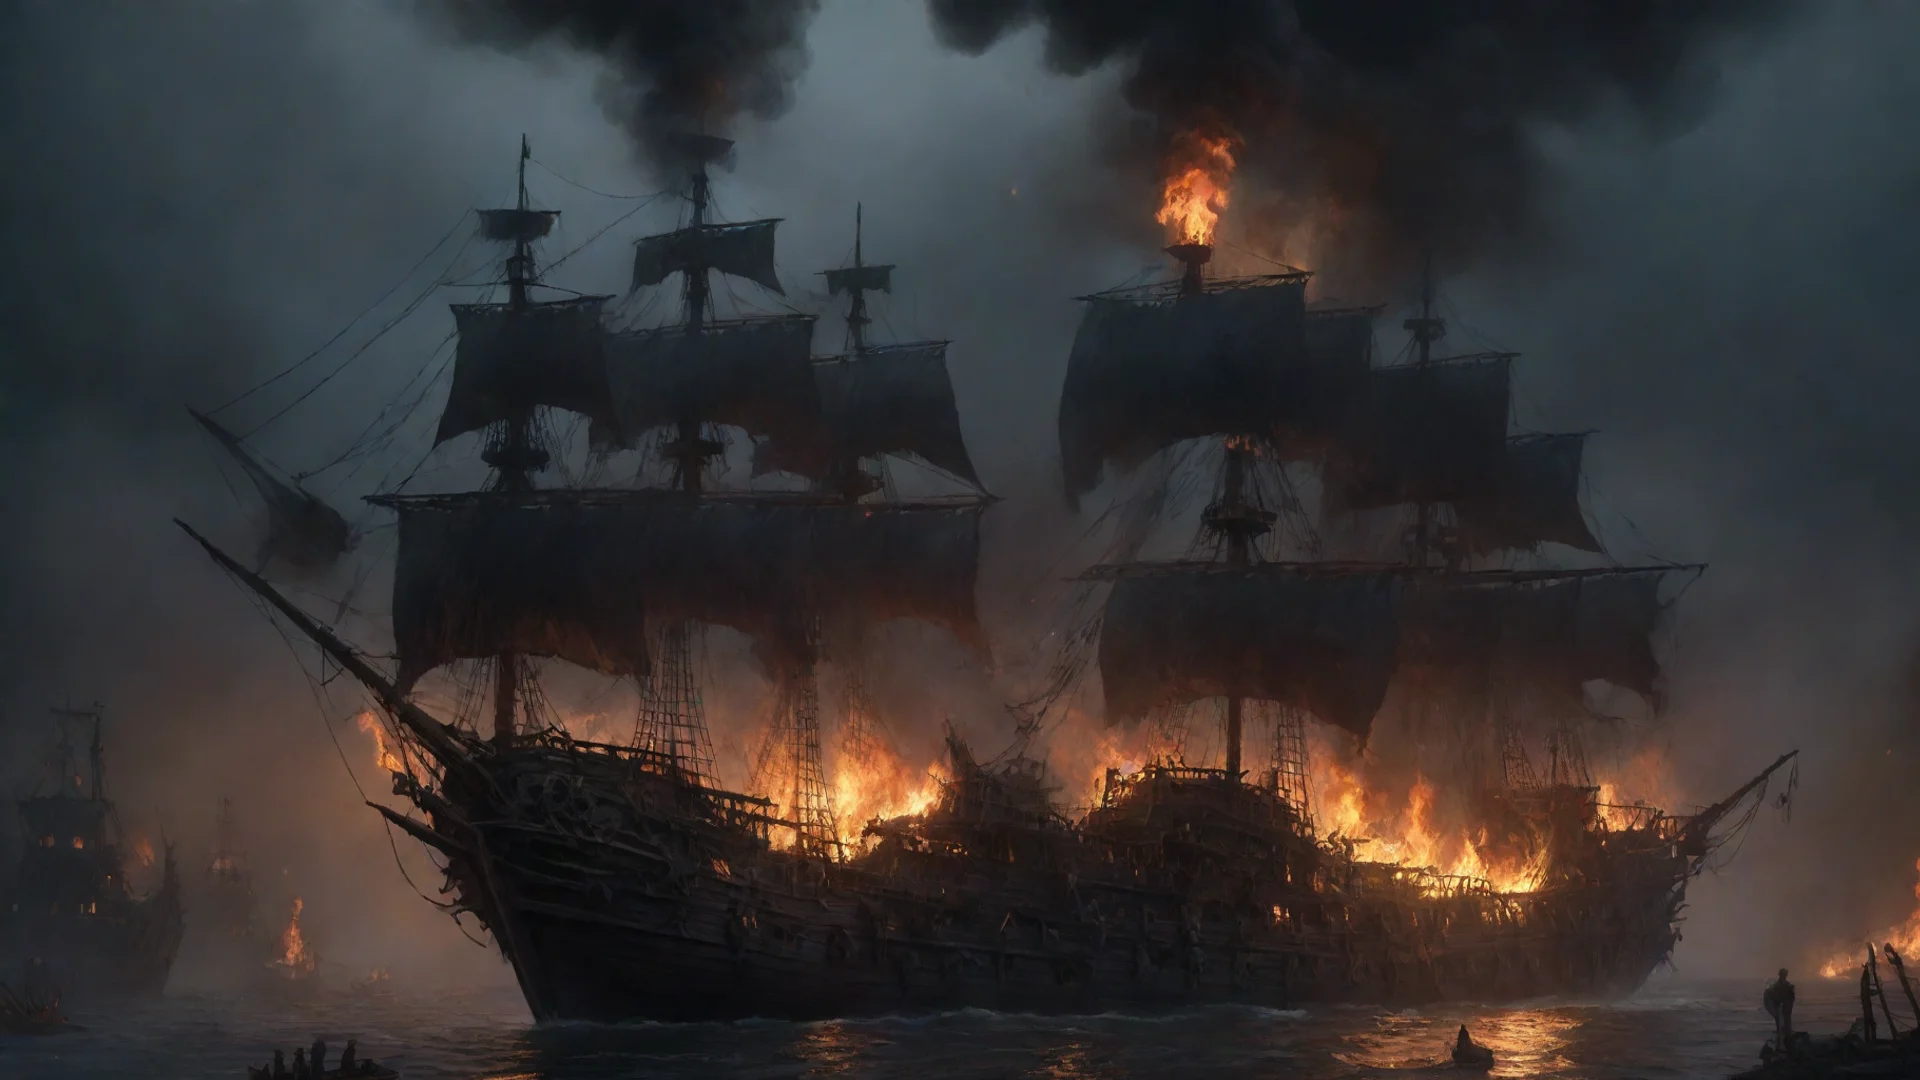 burning pirate ship concept art dark smoldering skeletons wide